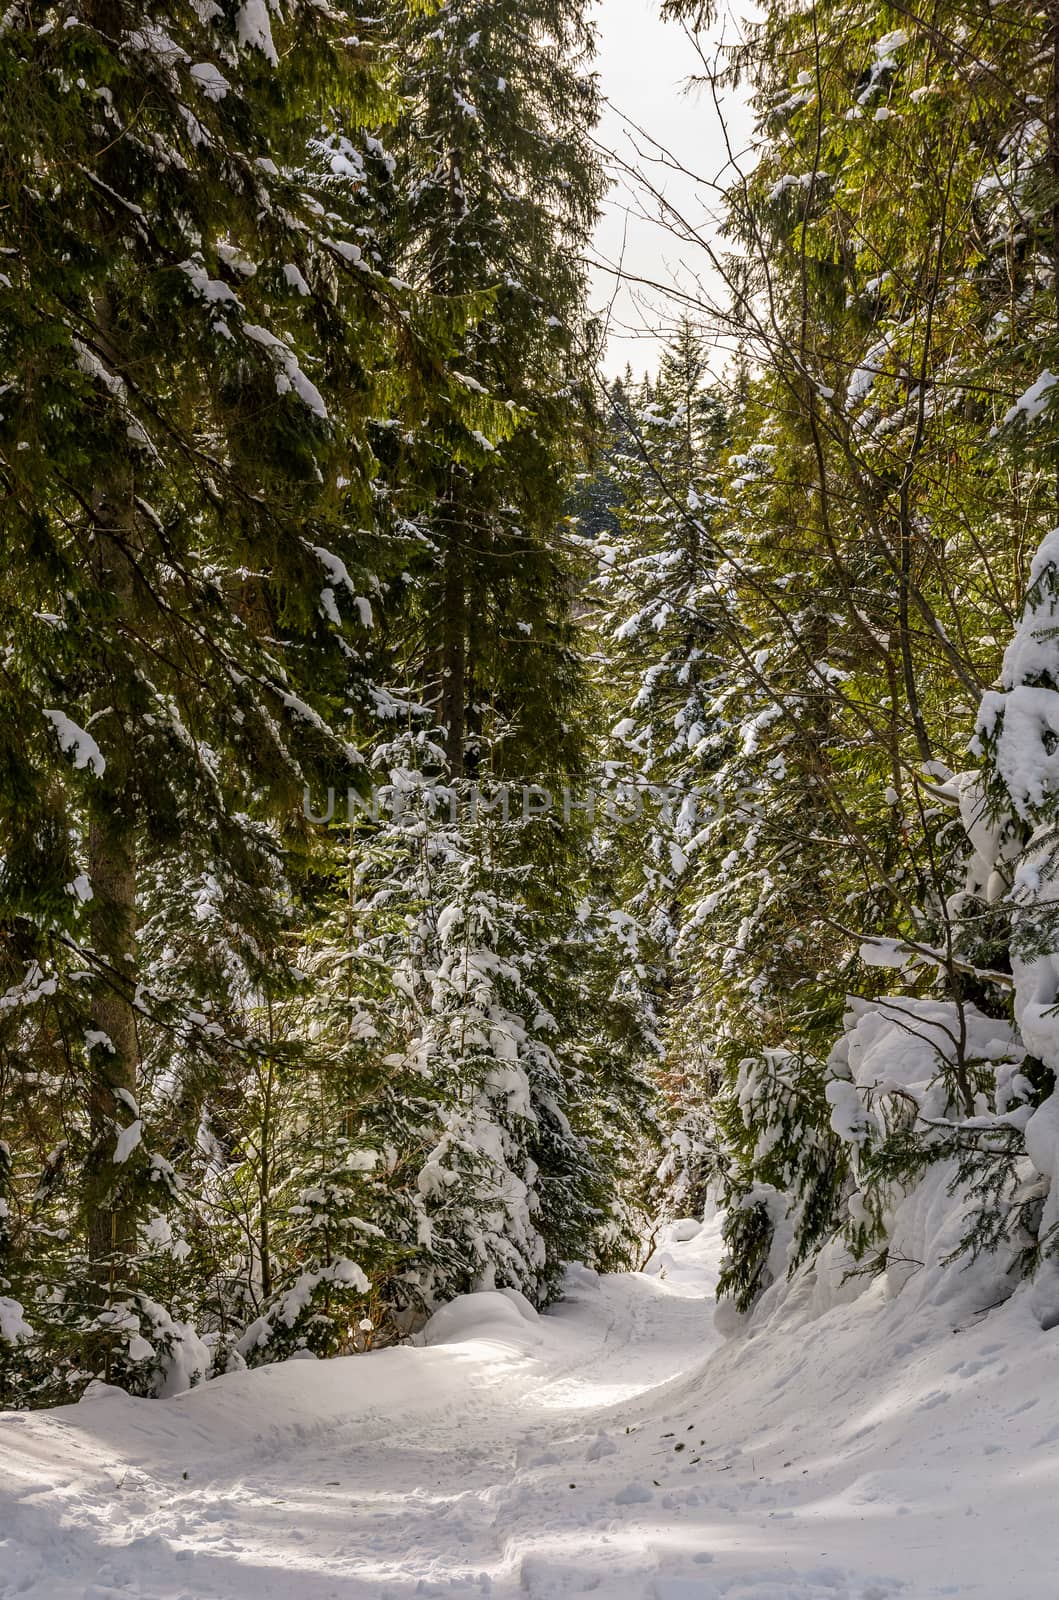 footpath in snowy spruce forest by Pellinni